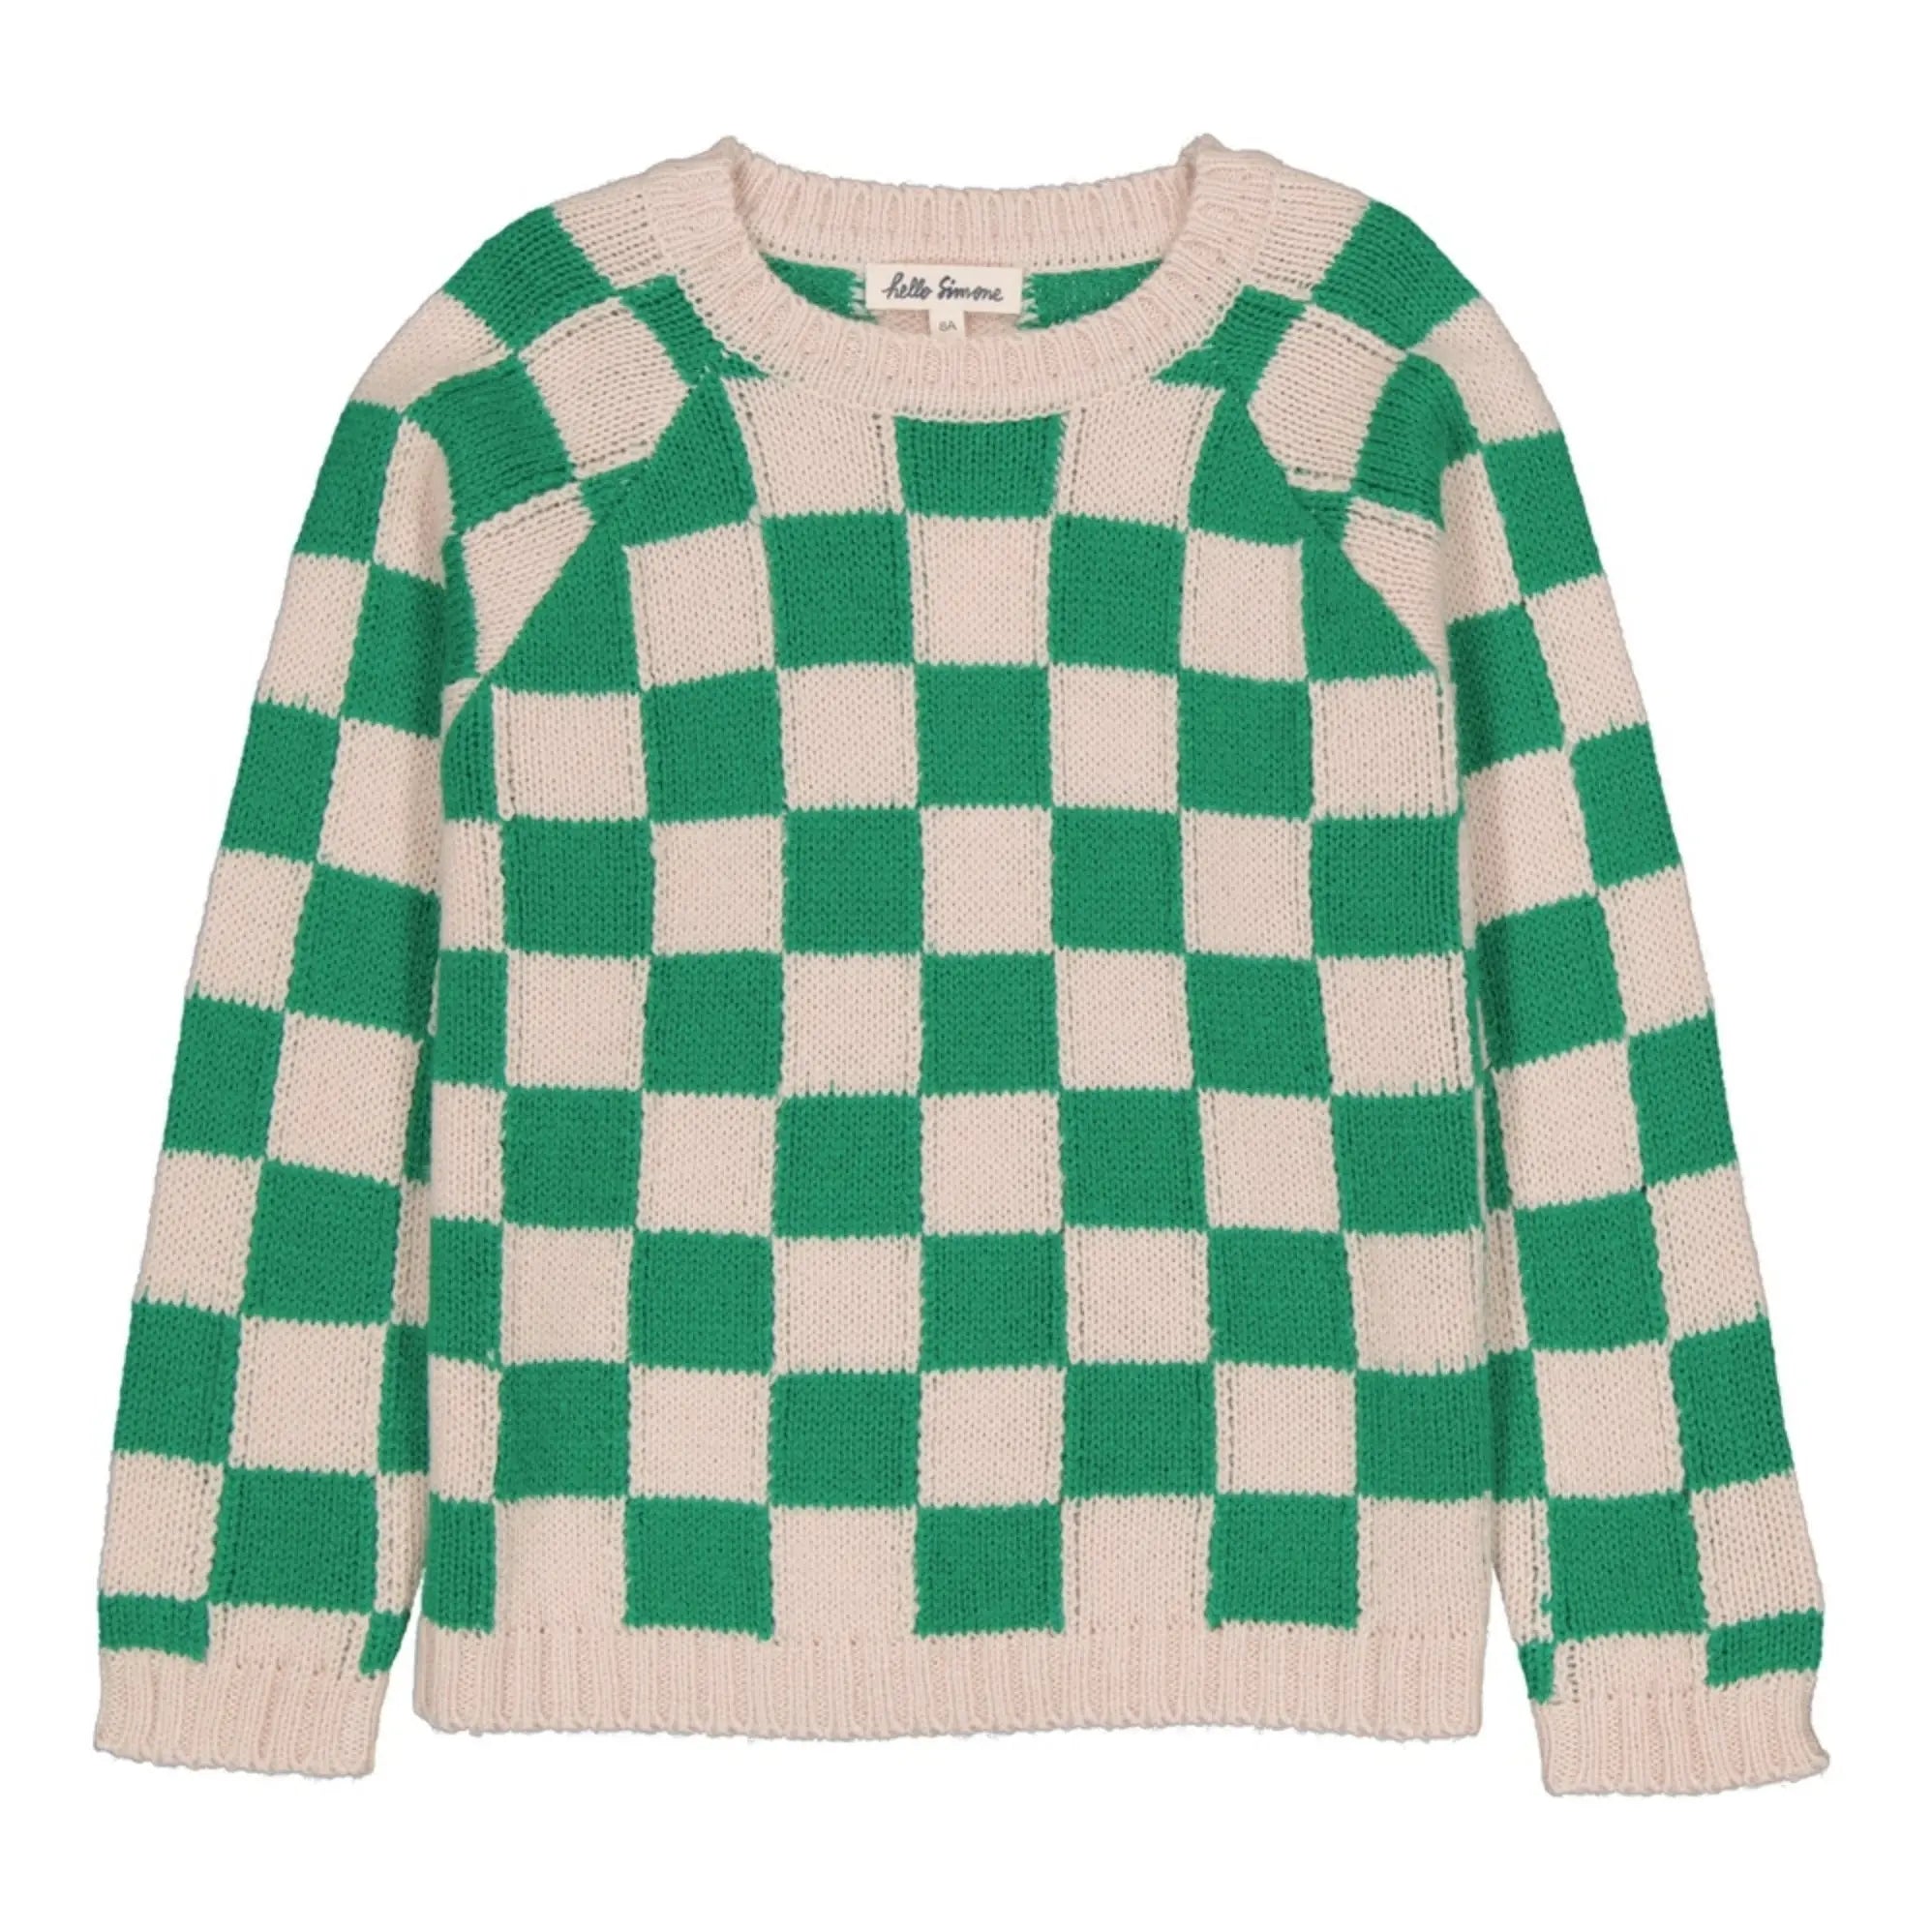 Matelot Sweater Check Green